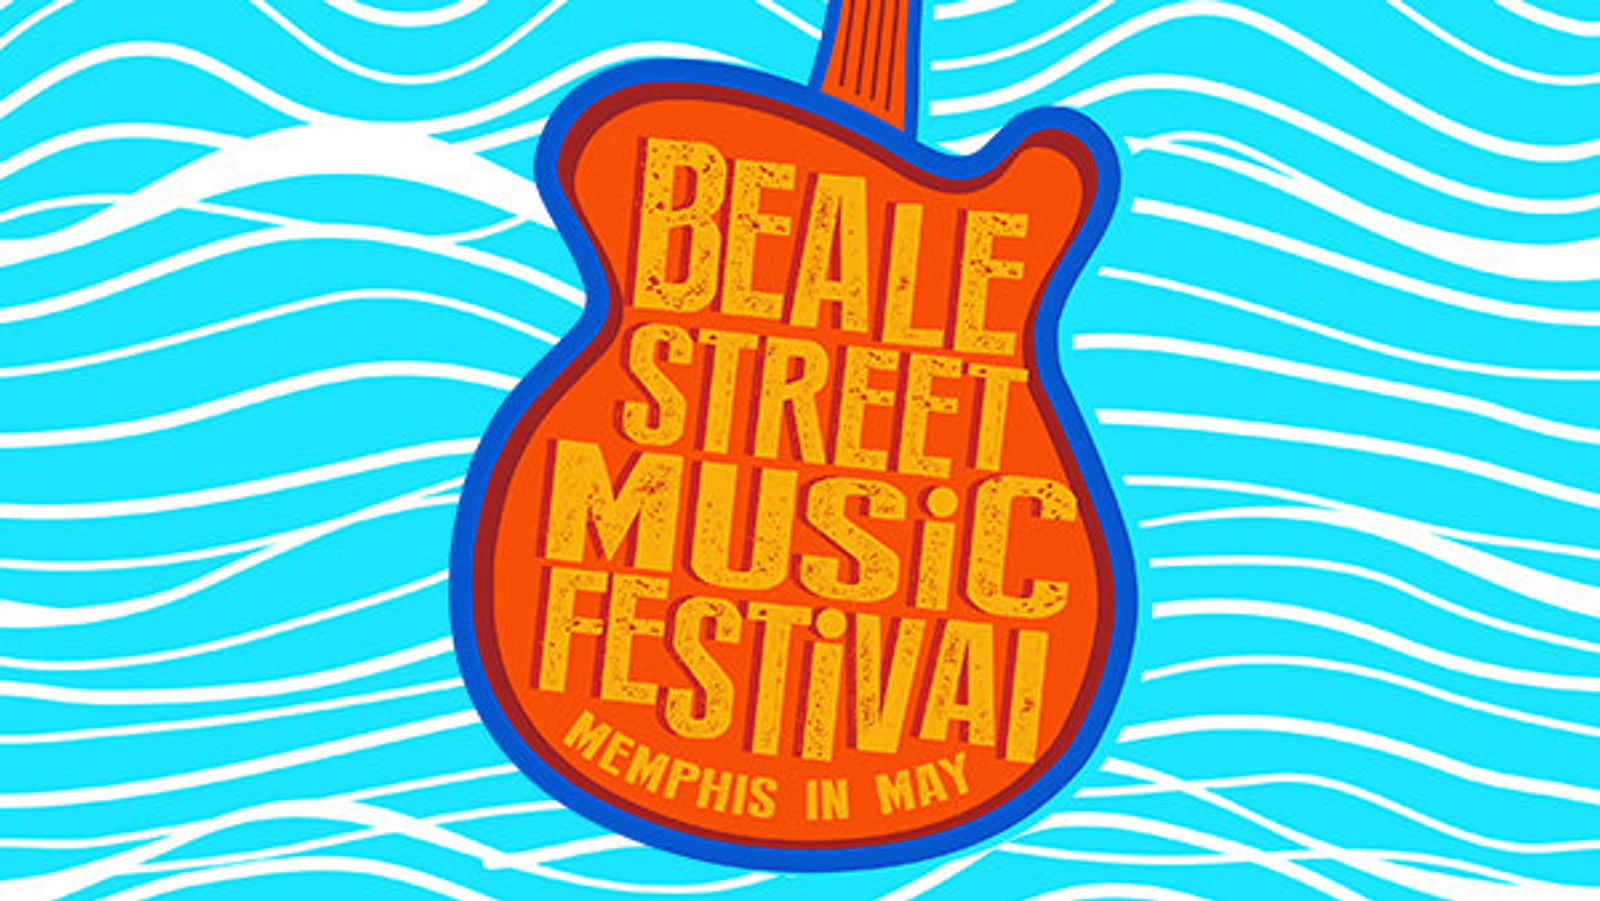 Beale Street Music Festival - Thumbnail Image